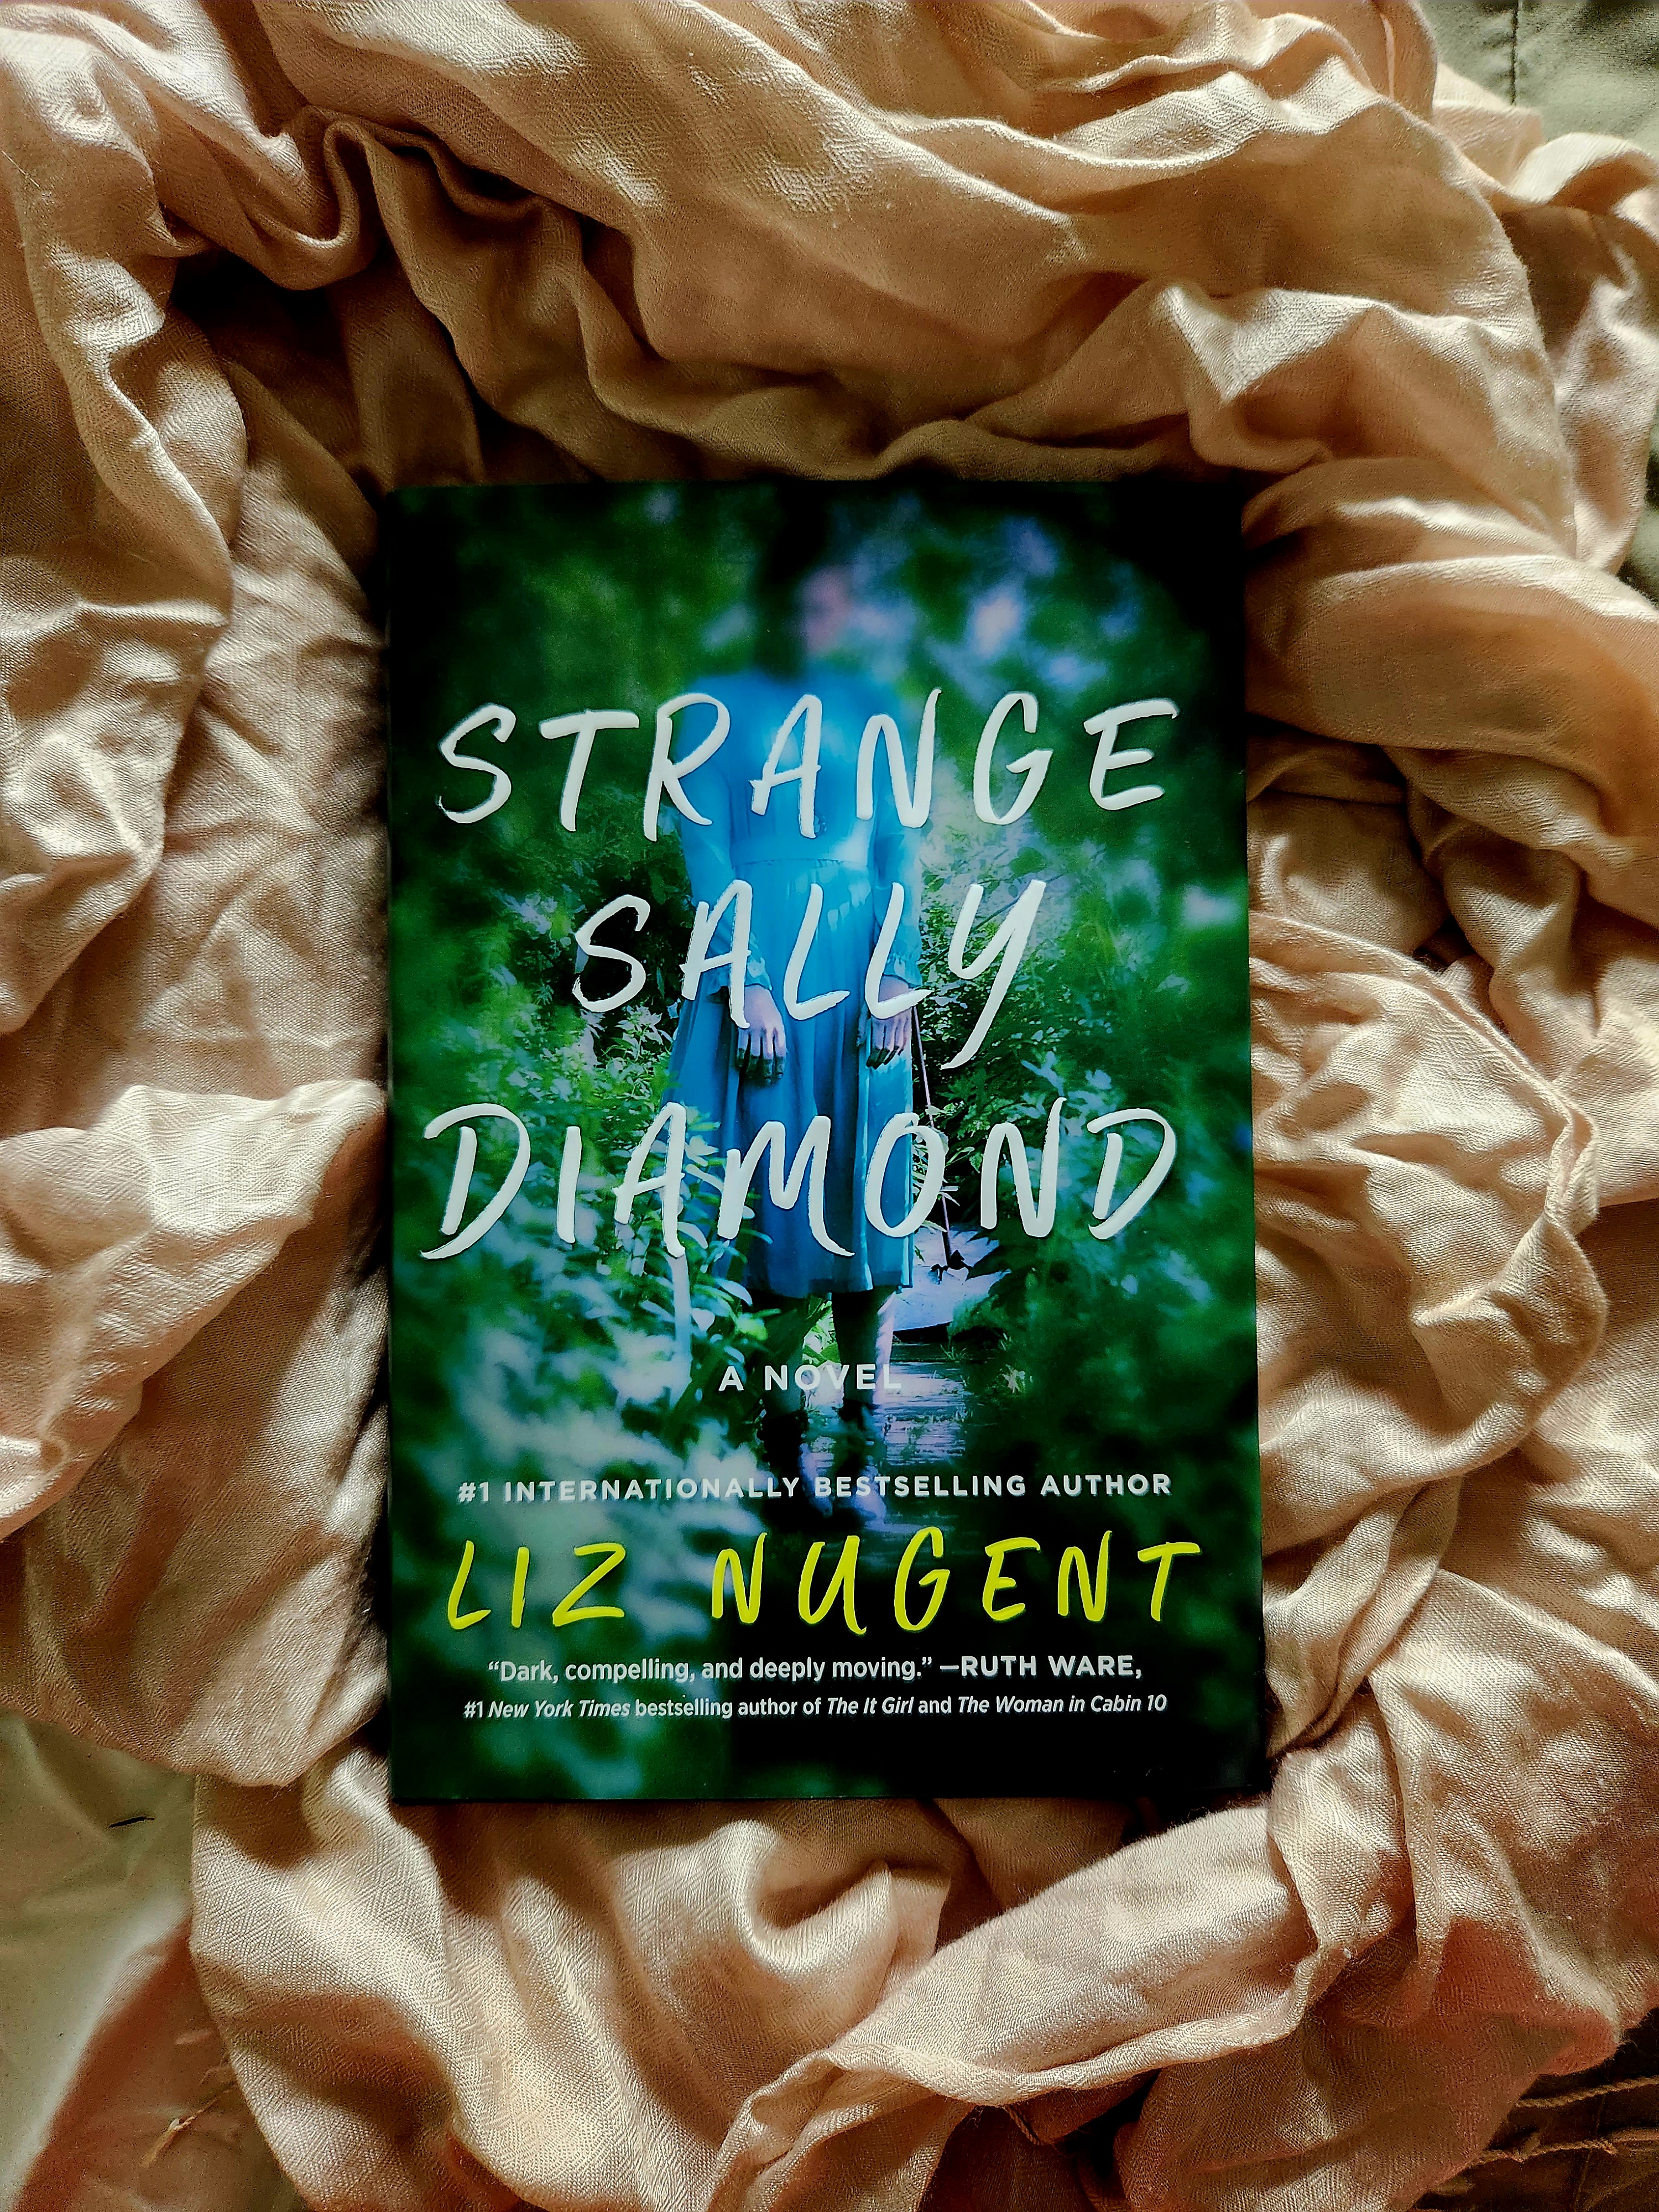 STRANGE SALLY DIAMOND: Book Club Podcast on Dark Side of the Word